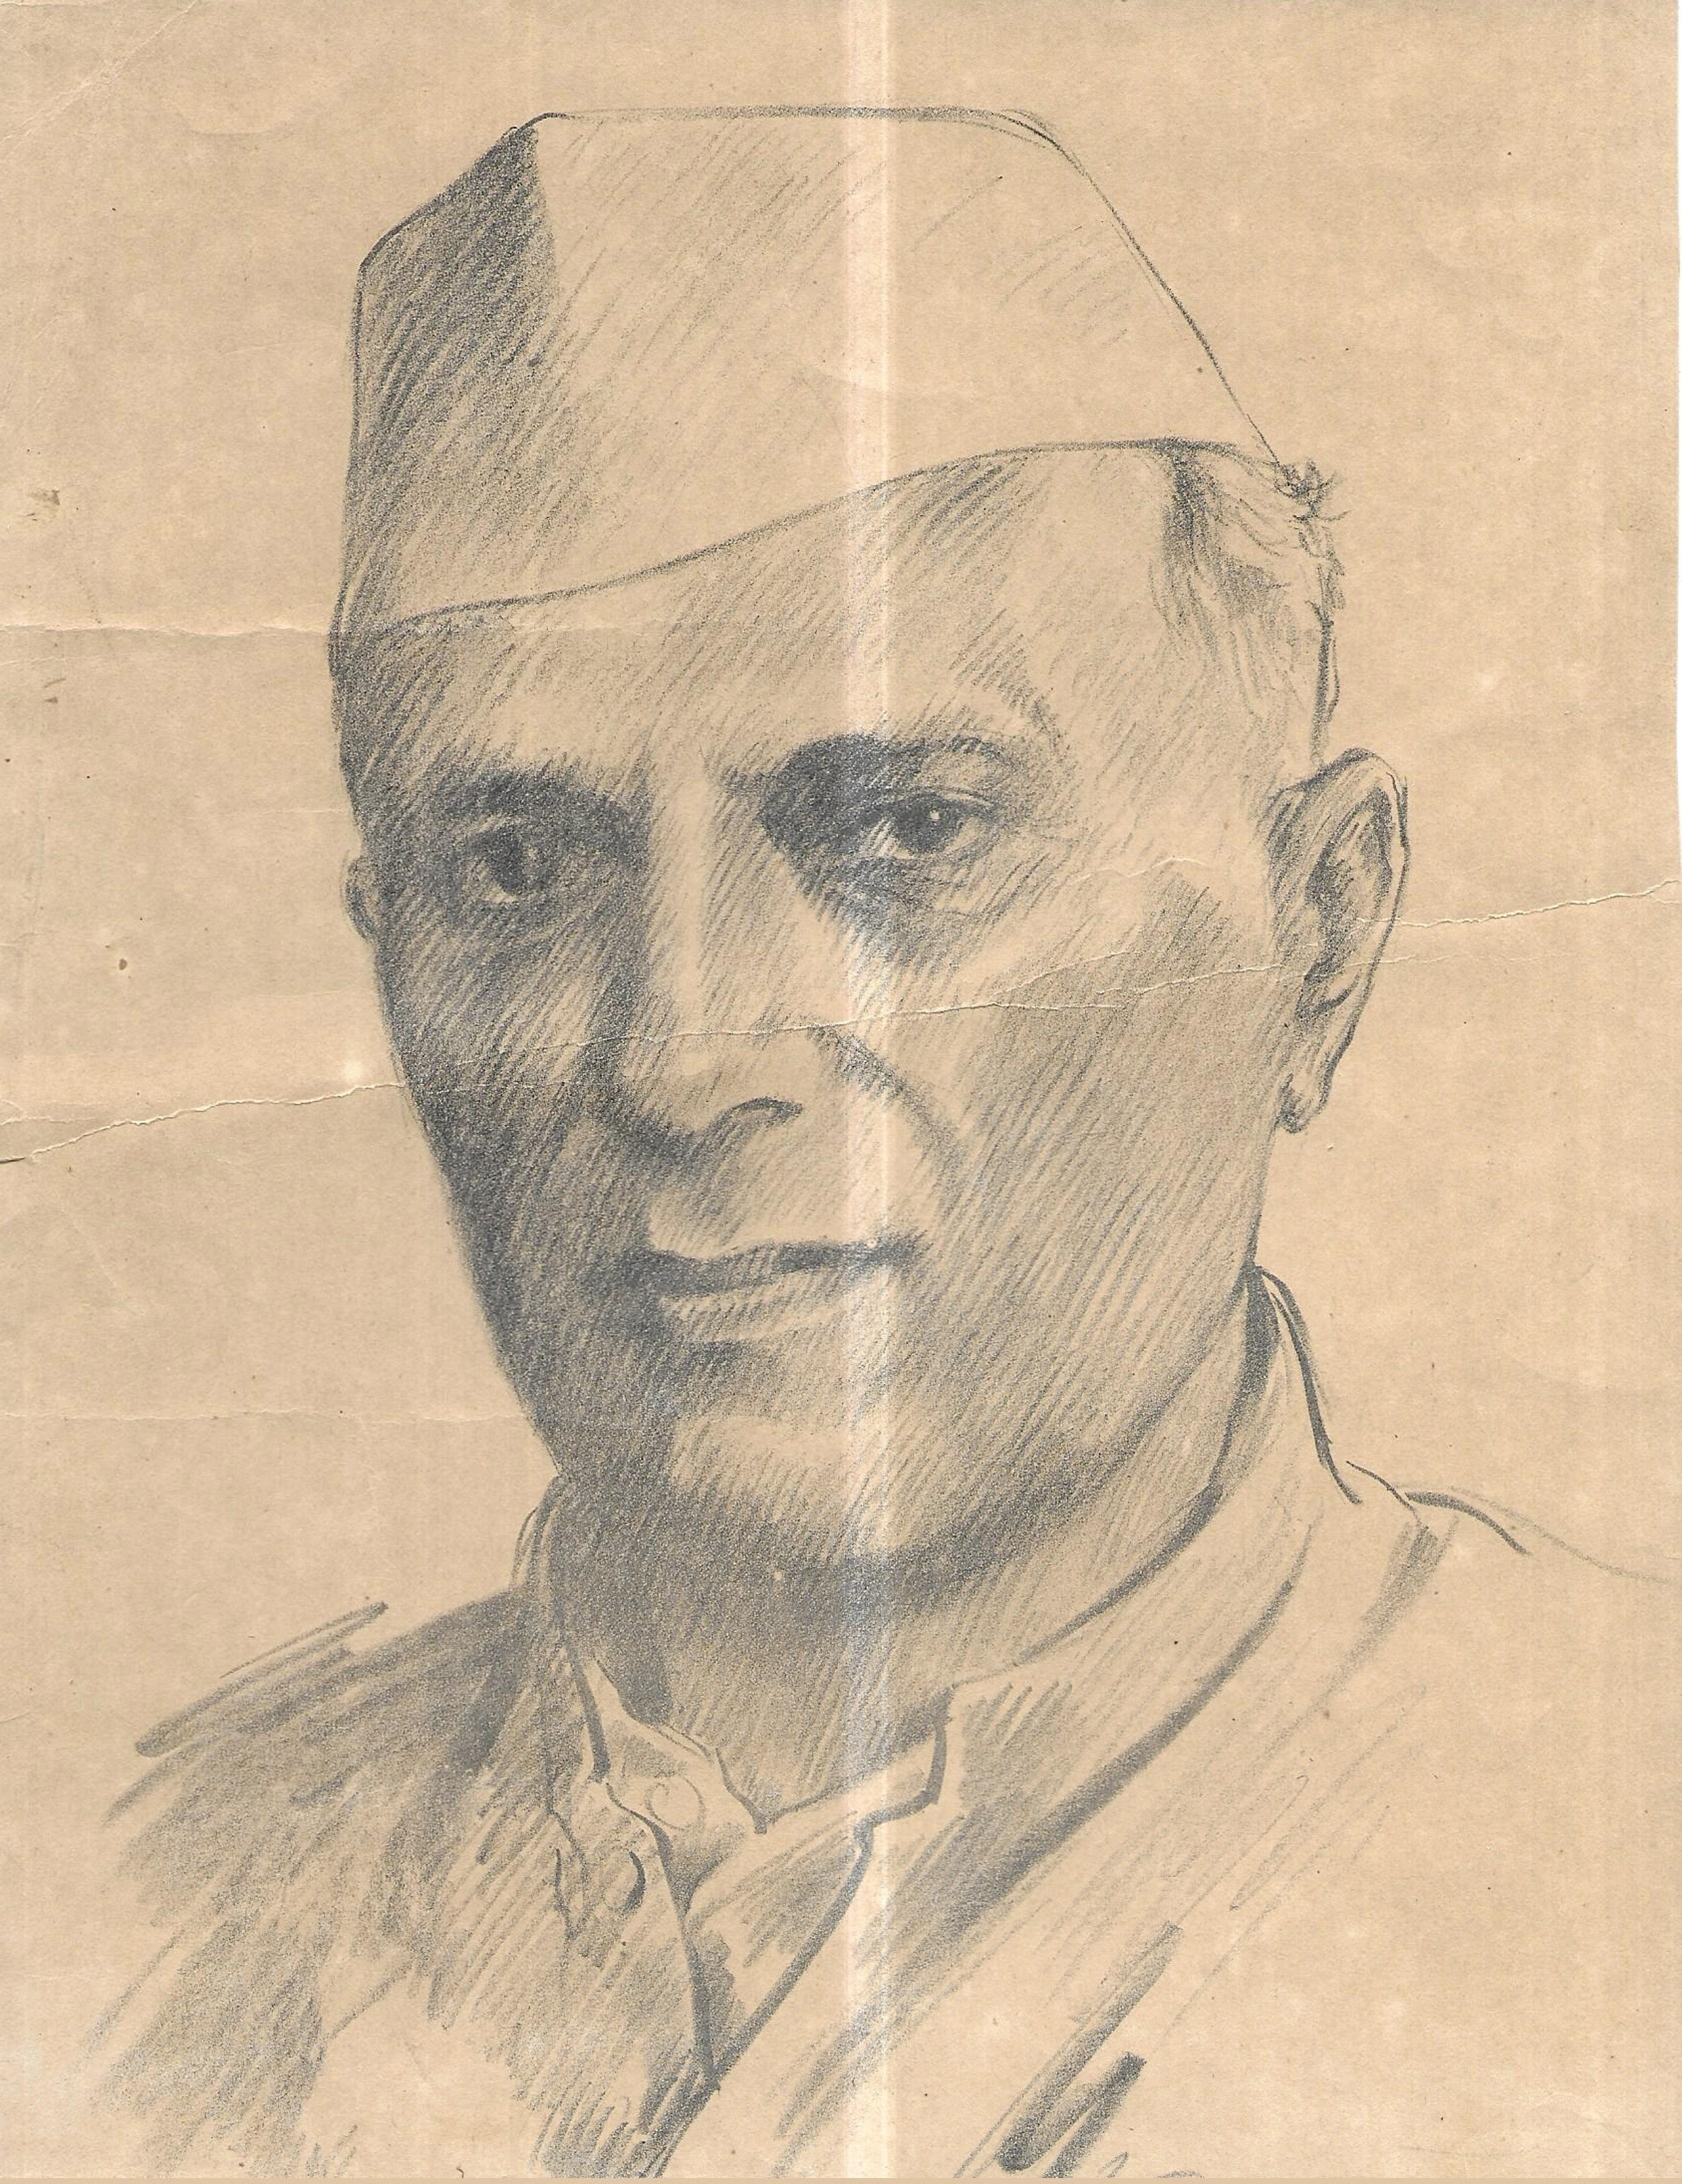 Portrait Nehru: Over 60 Royalty-Free Licensable Stock Vectors & Vector Art  | Shutterstock